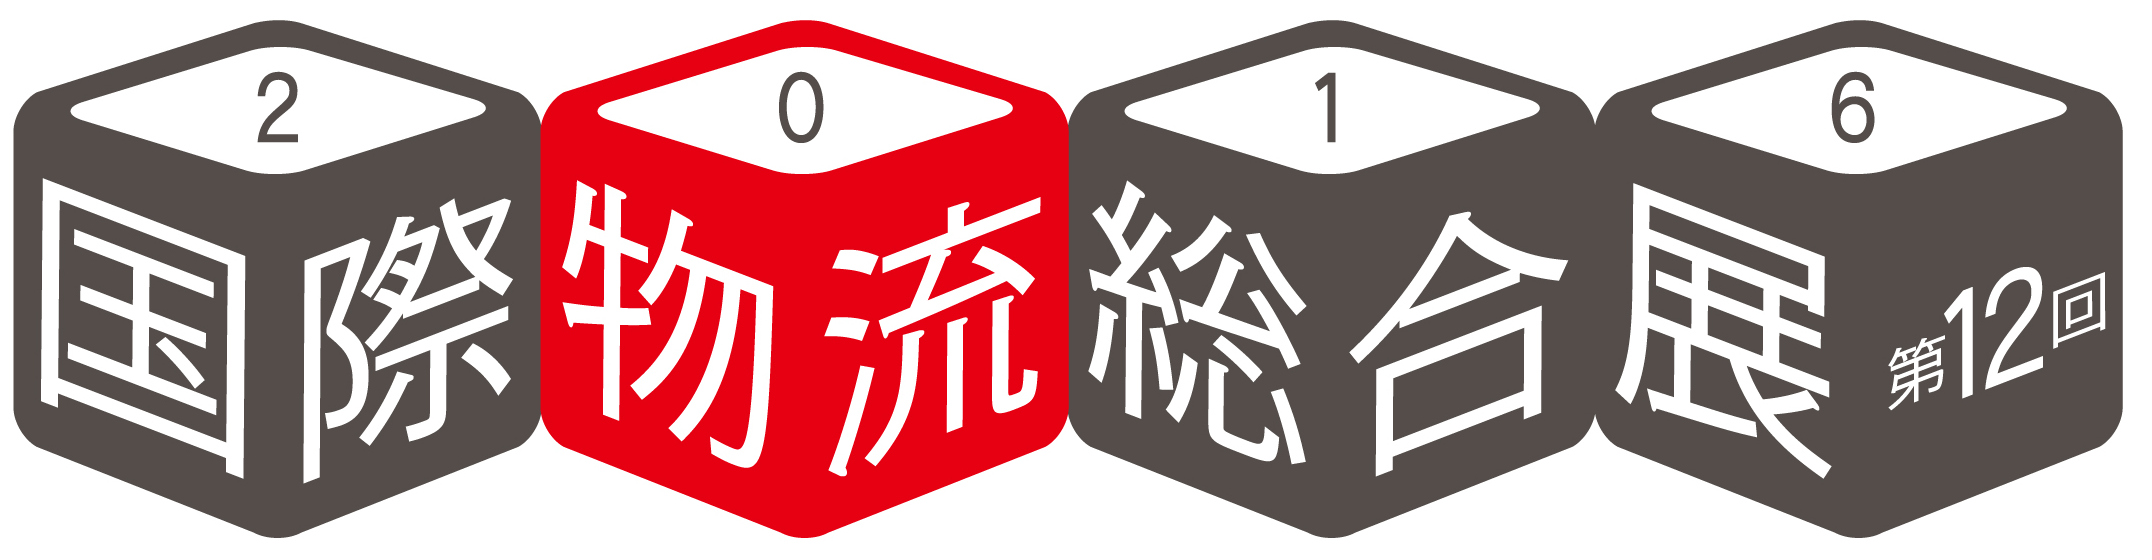 logo_jpg-001